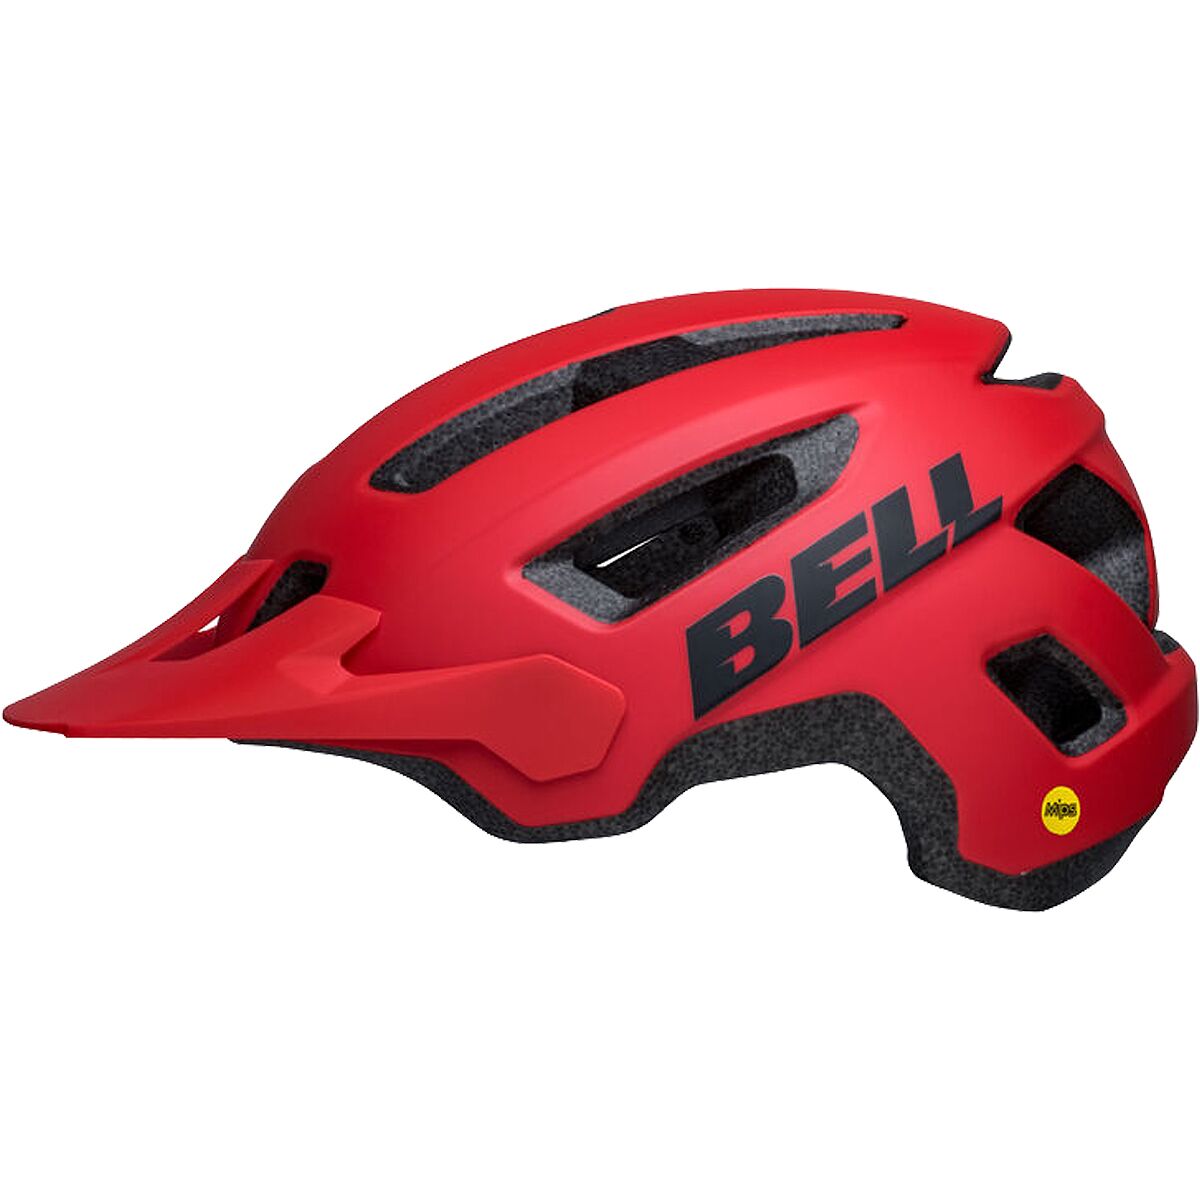 New Born Riders. Casco de niño Bell Bellino bicicleta Rojo Helicopteros.